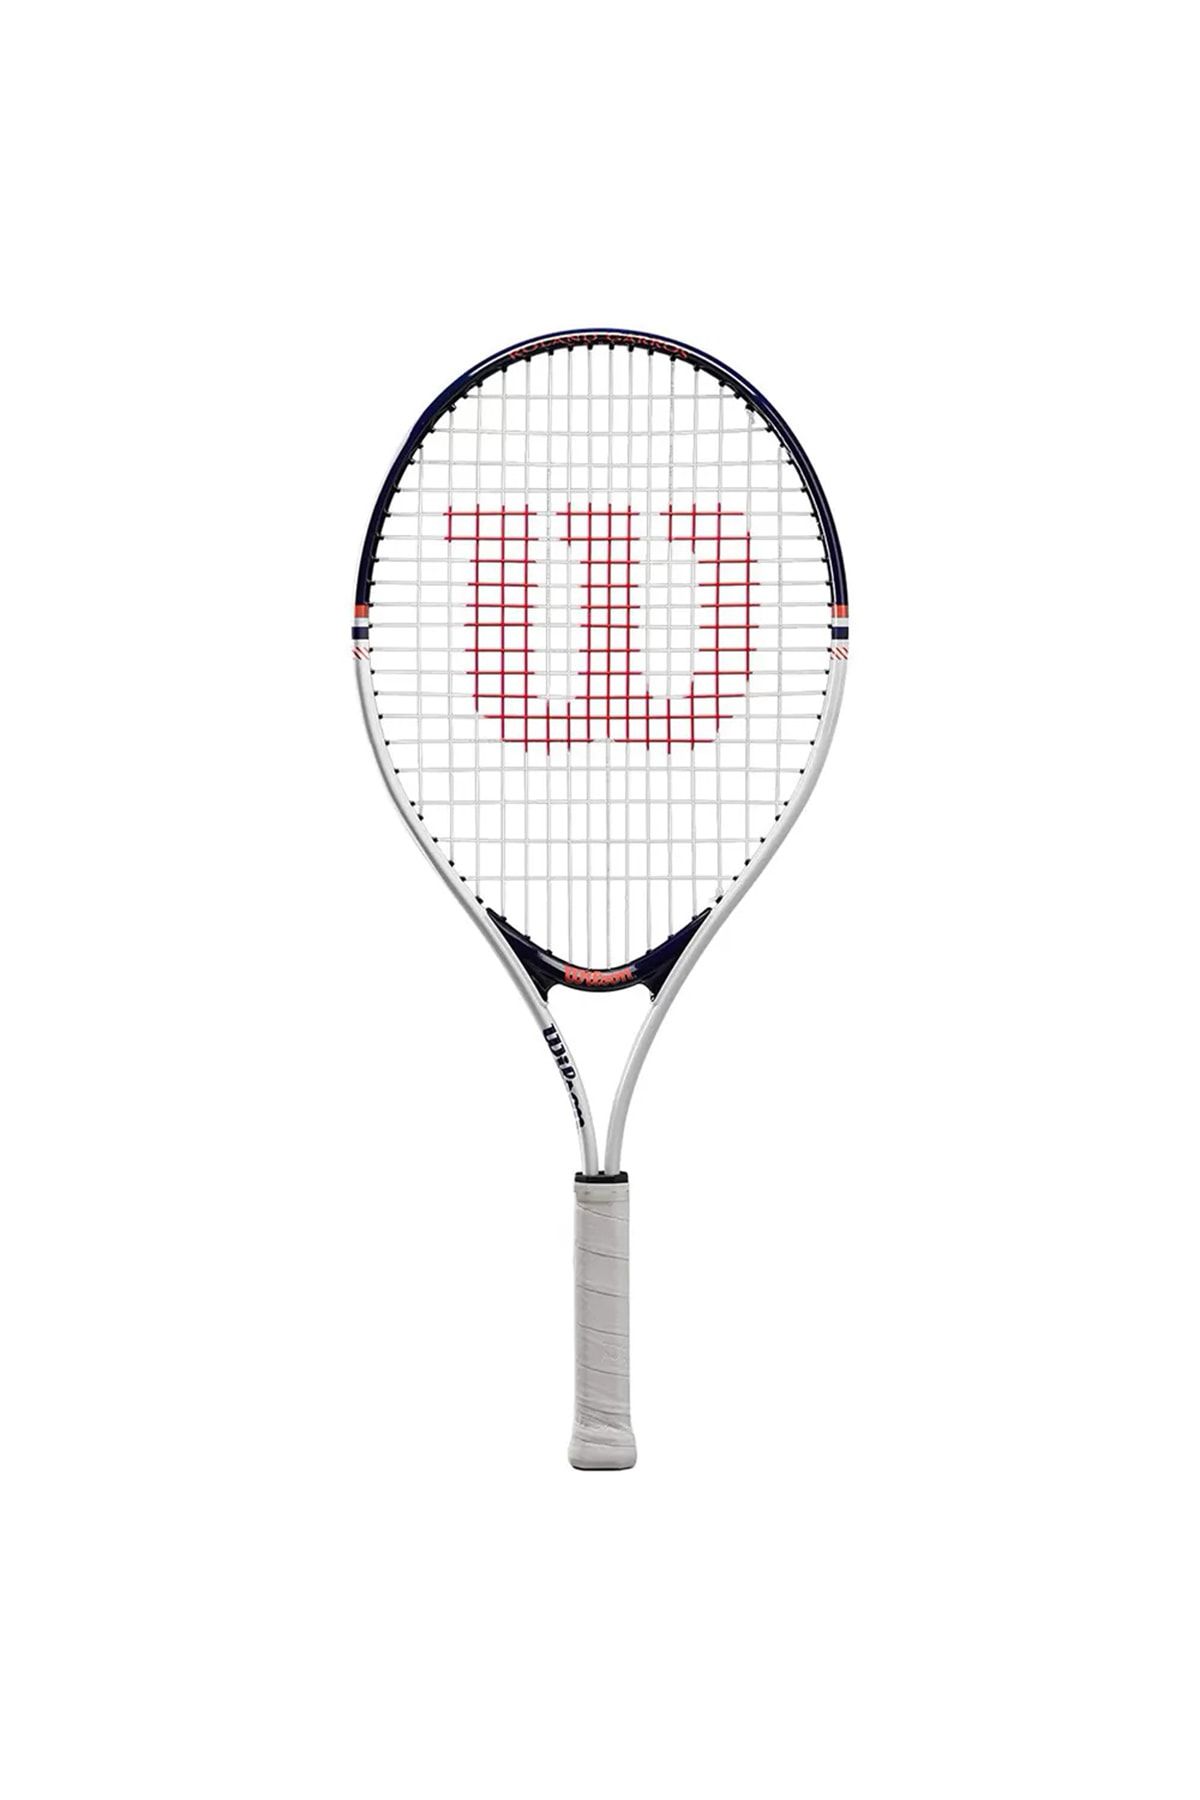 Wilson 200 gr Wr069910 Roland Garros 21 Tenis Raketi Mavi Kordajlı 90 inch2 21 inch